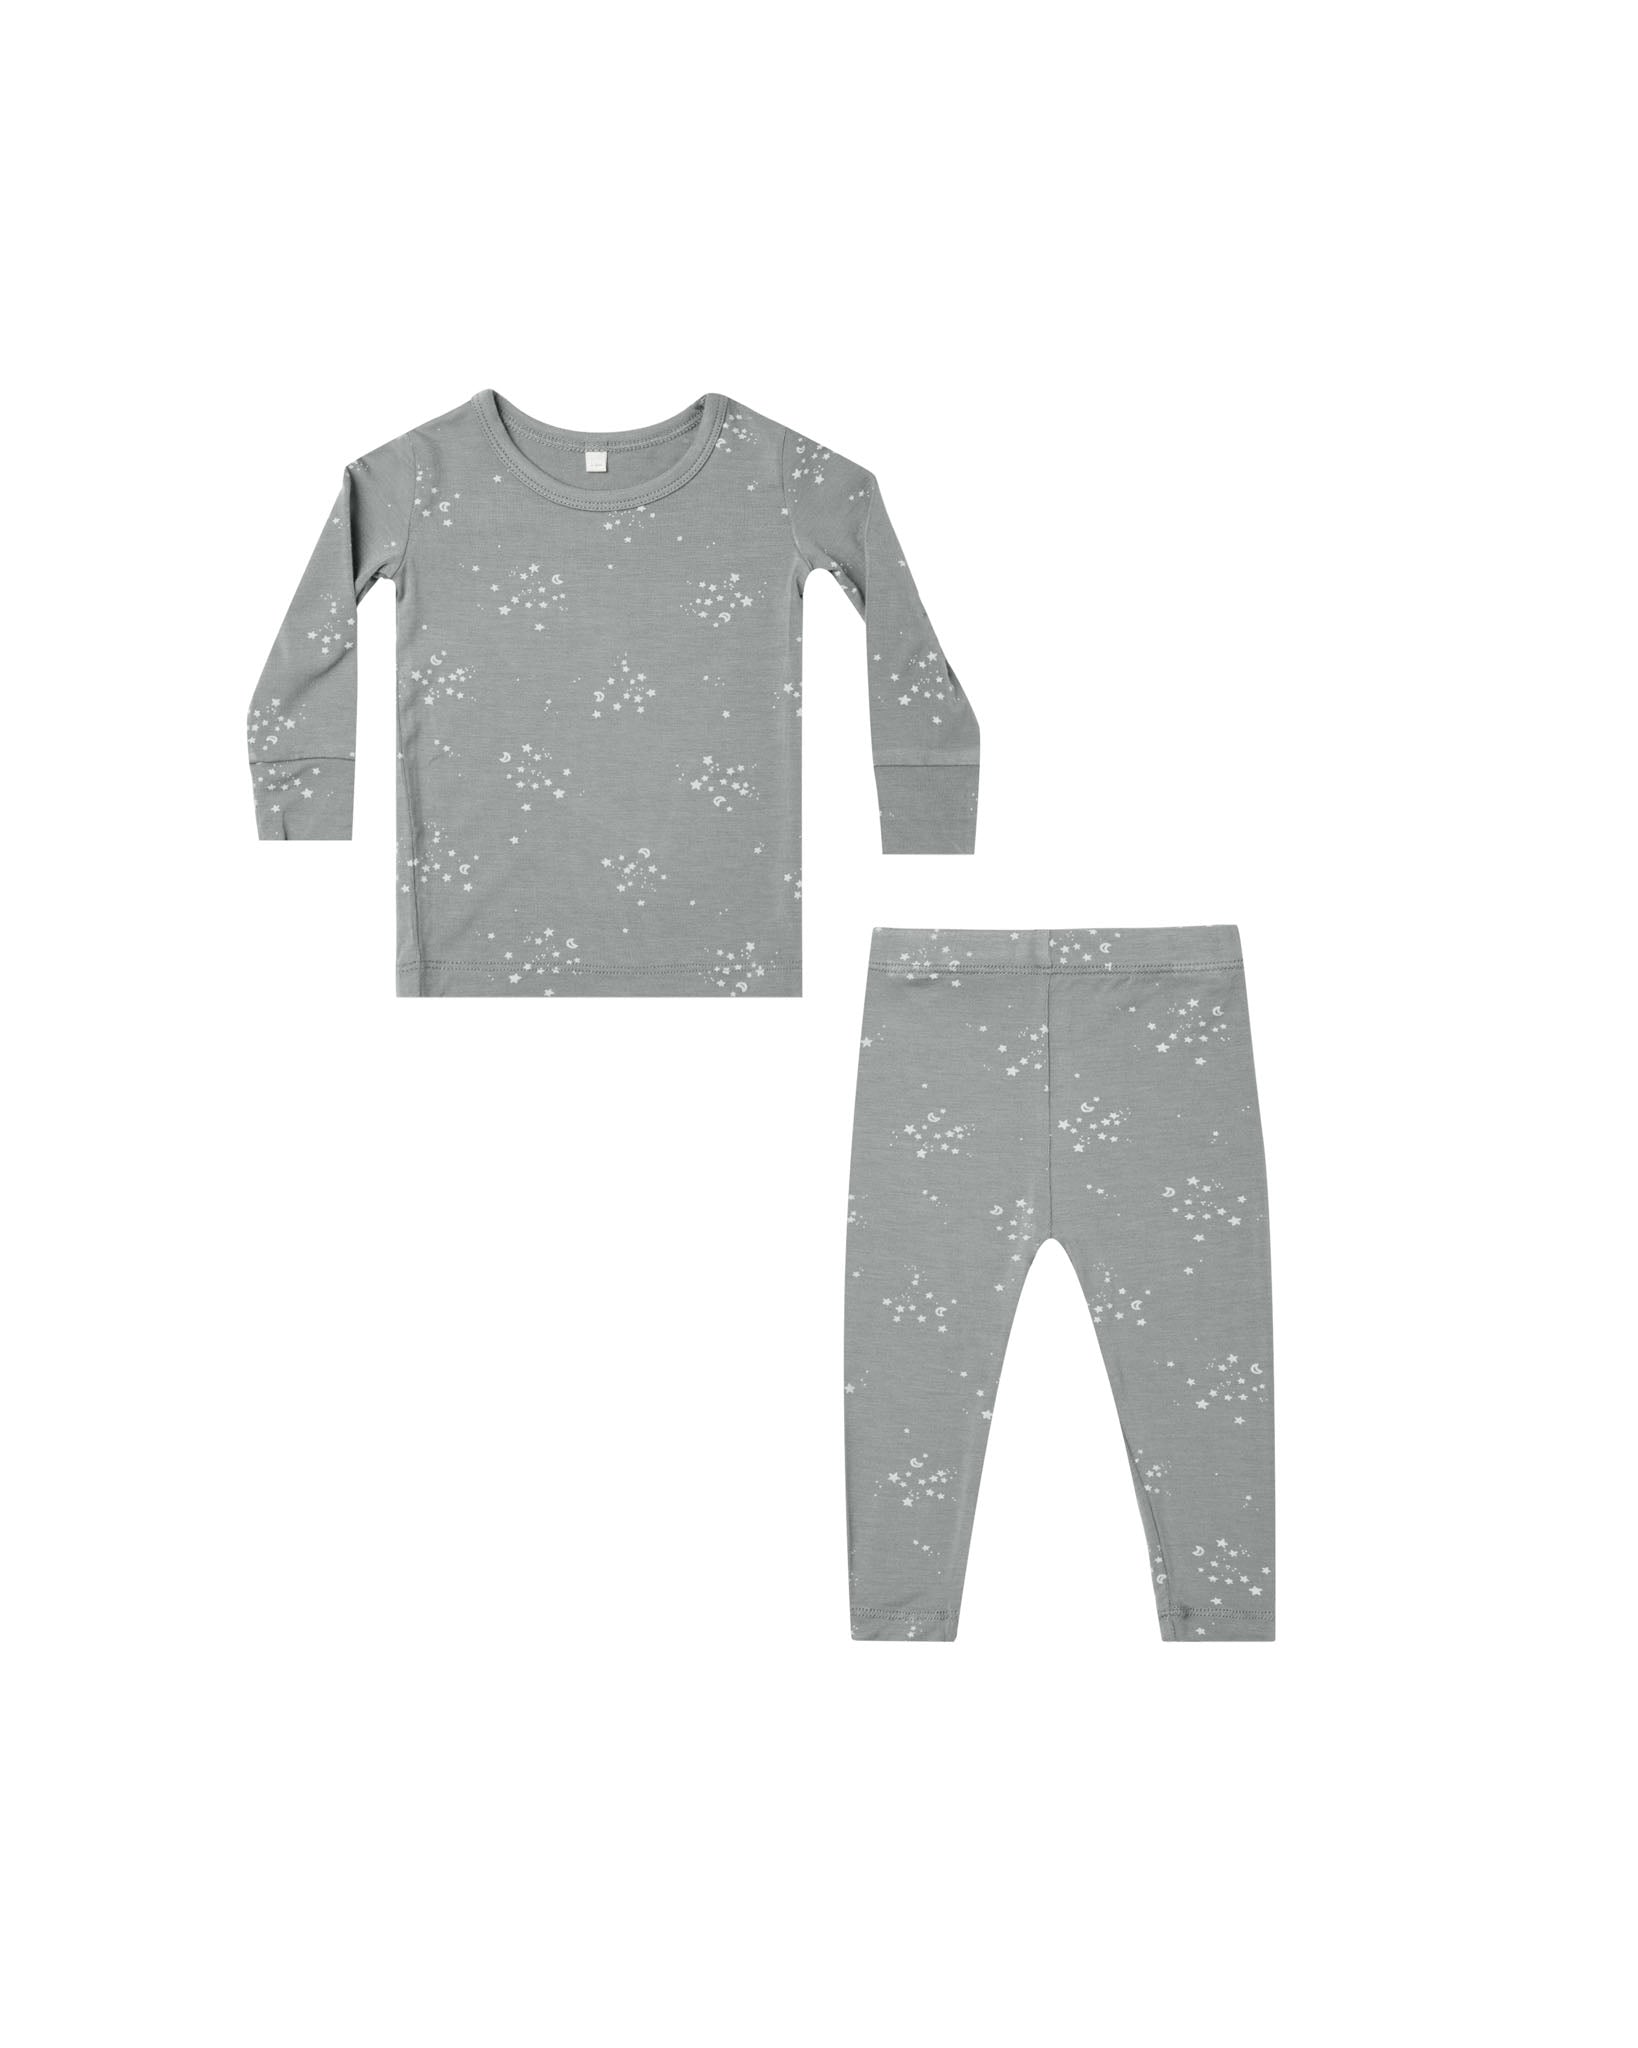 Twinkle Bamboo Pajama Set - Twinkle Twinkle Little One